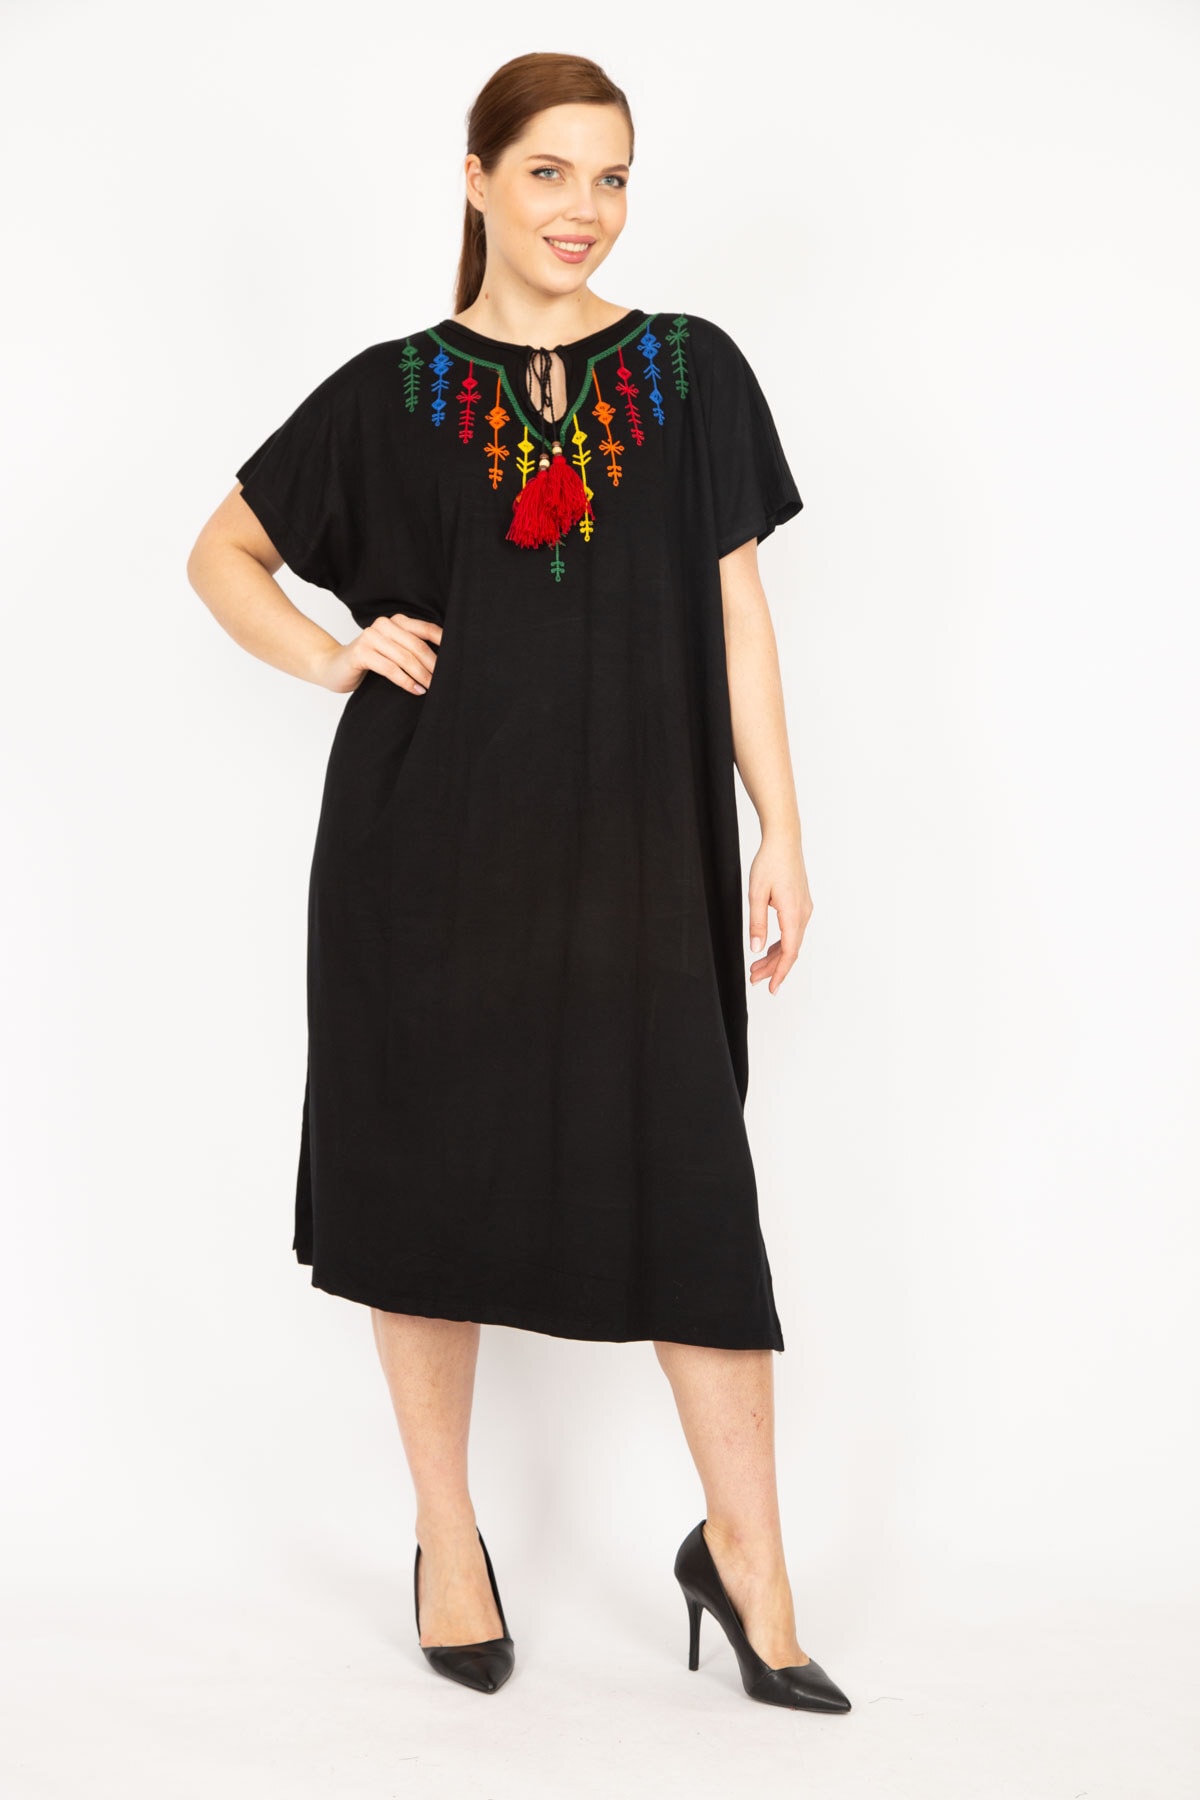 Şans Women's Black Plus Size Embroidery Detailed Low-Sleeve Dress